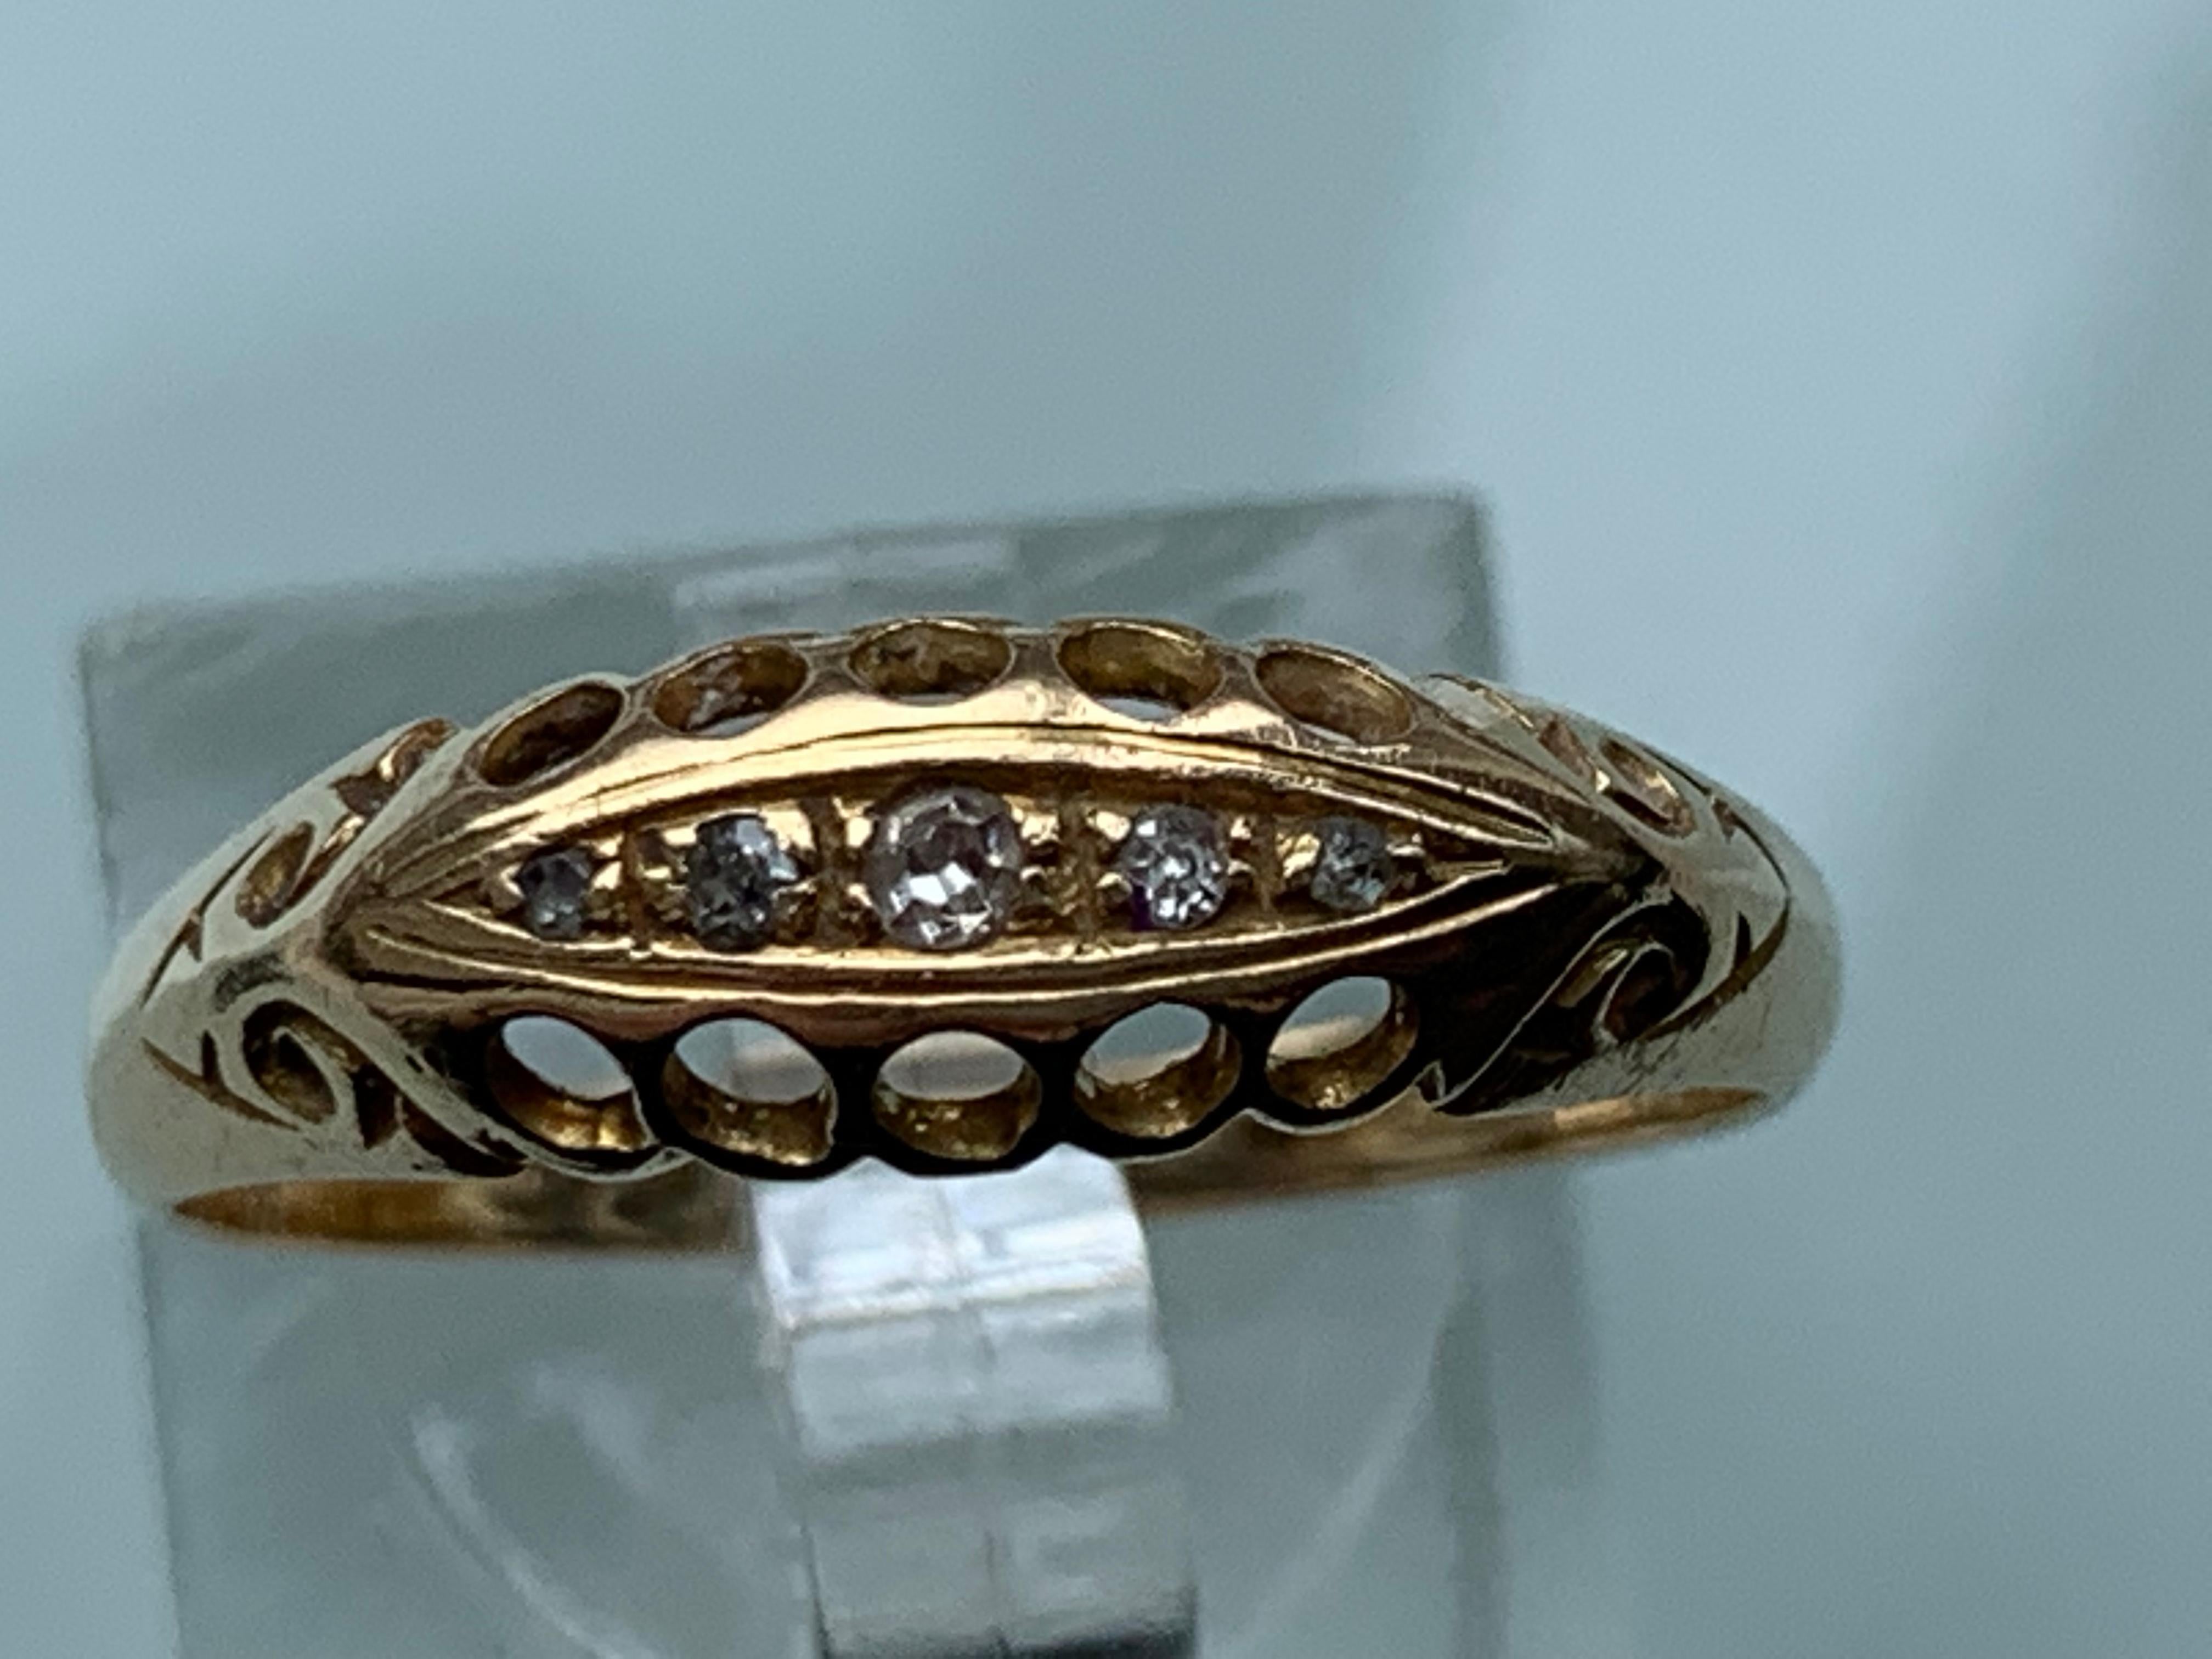 18ct 750 Gold Antique Edwardian Diamond Ring 
Five mine cut Natural Diamonds 1mm , 1.75mm, 2mm, 1.75mm x 1mm
Total = 0.08 Carats
S B & S Ltd  Dated 1905 